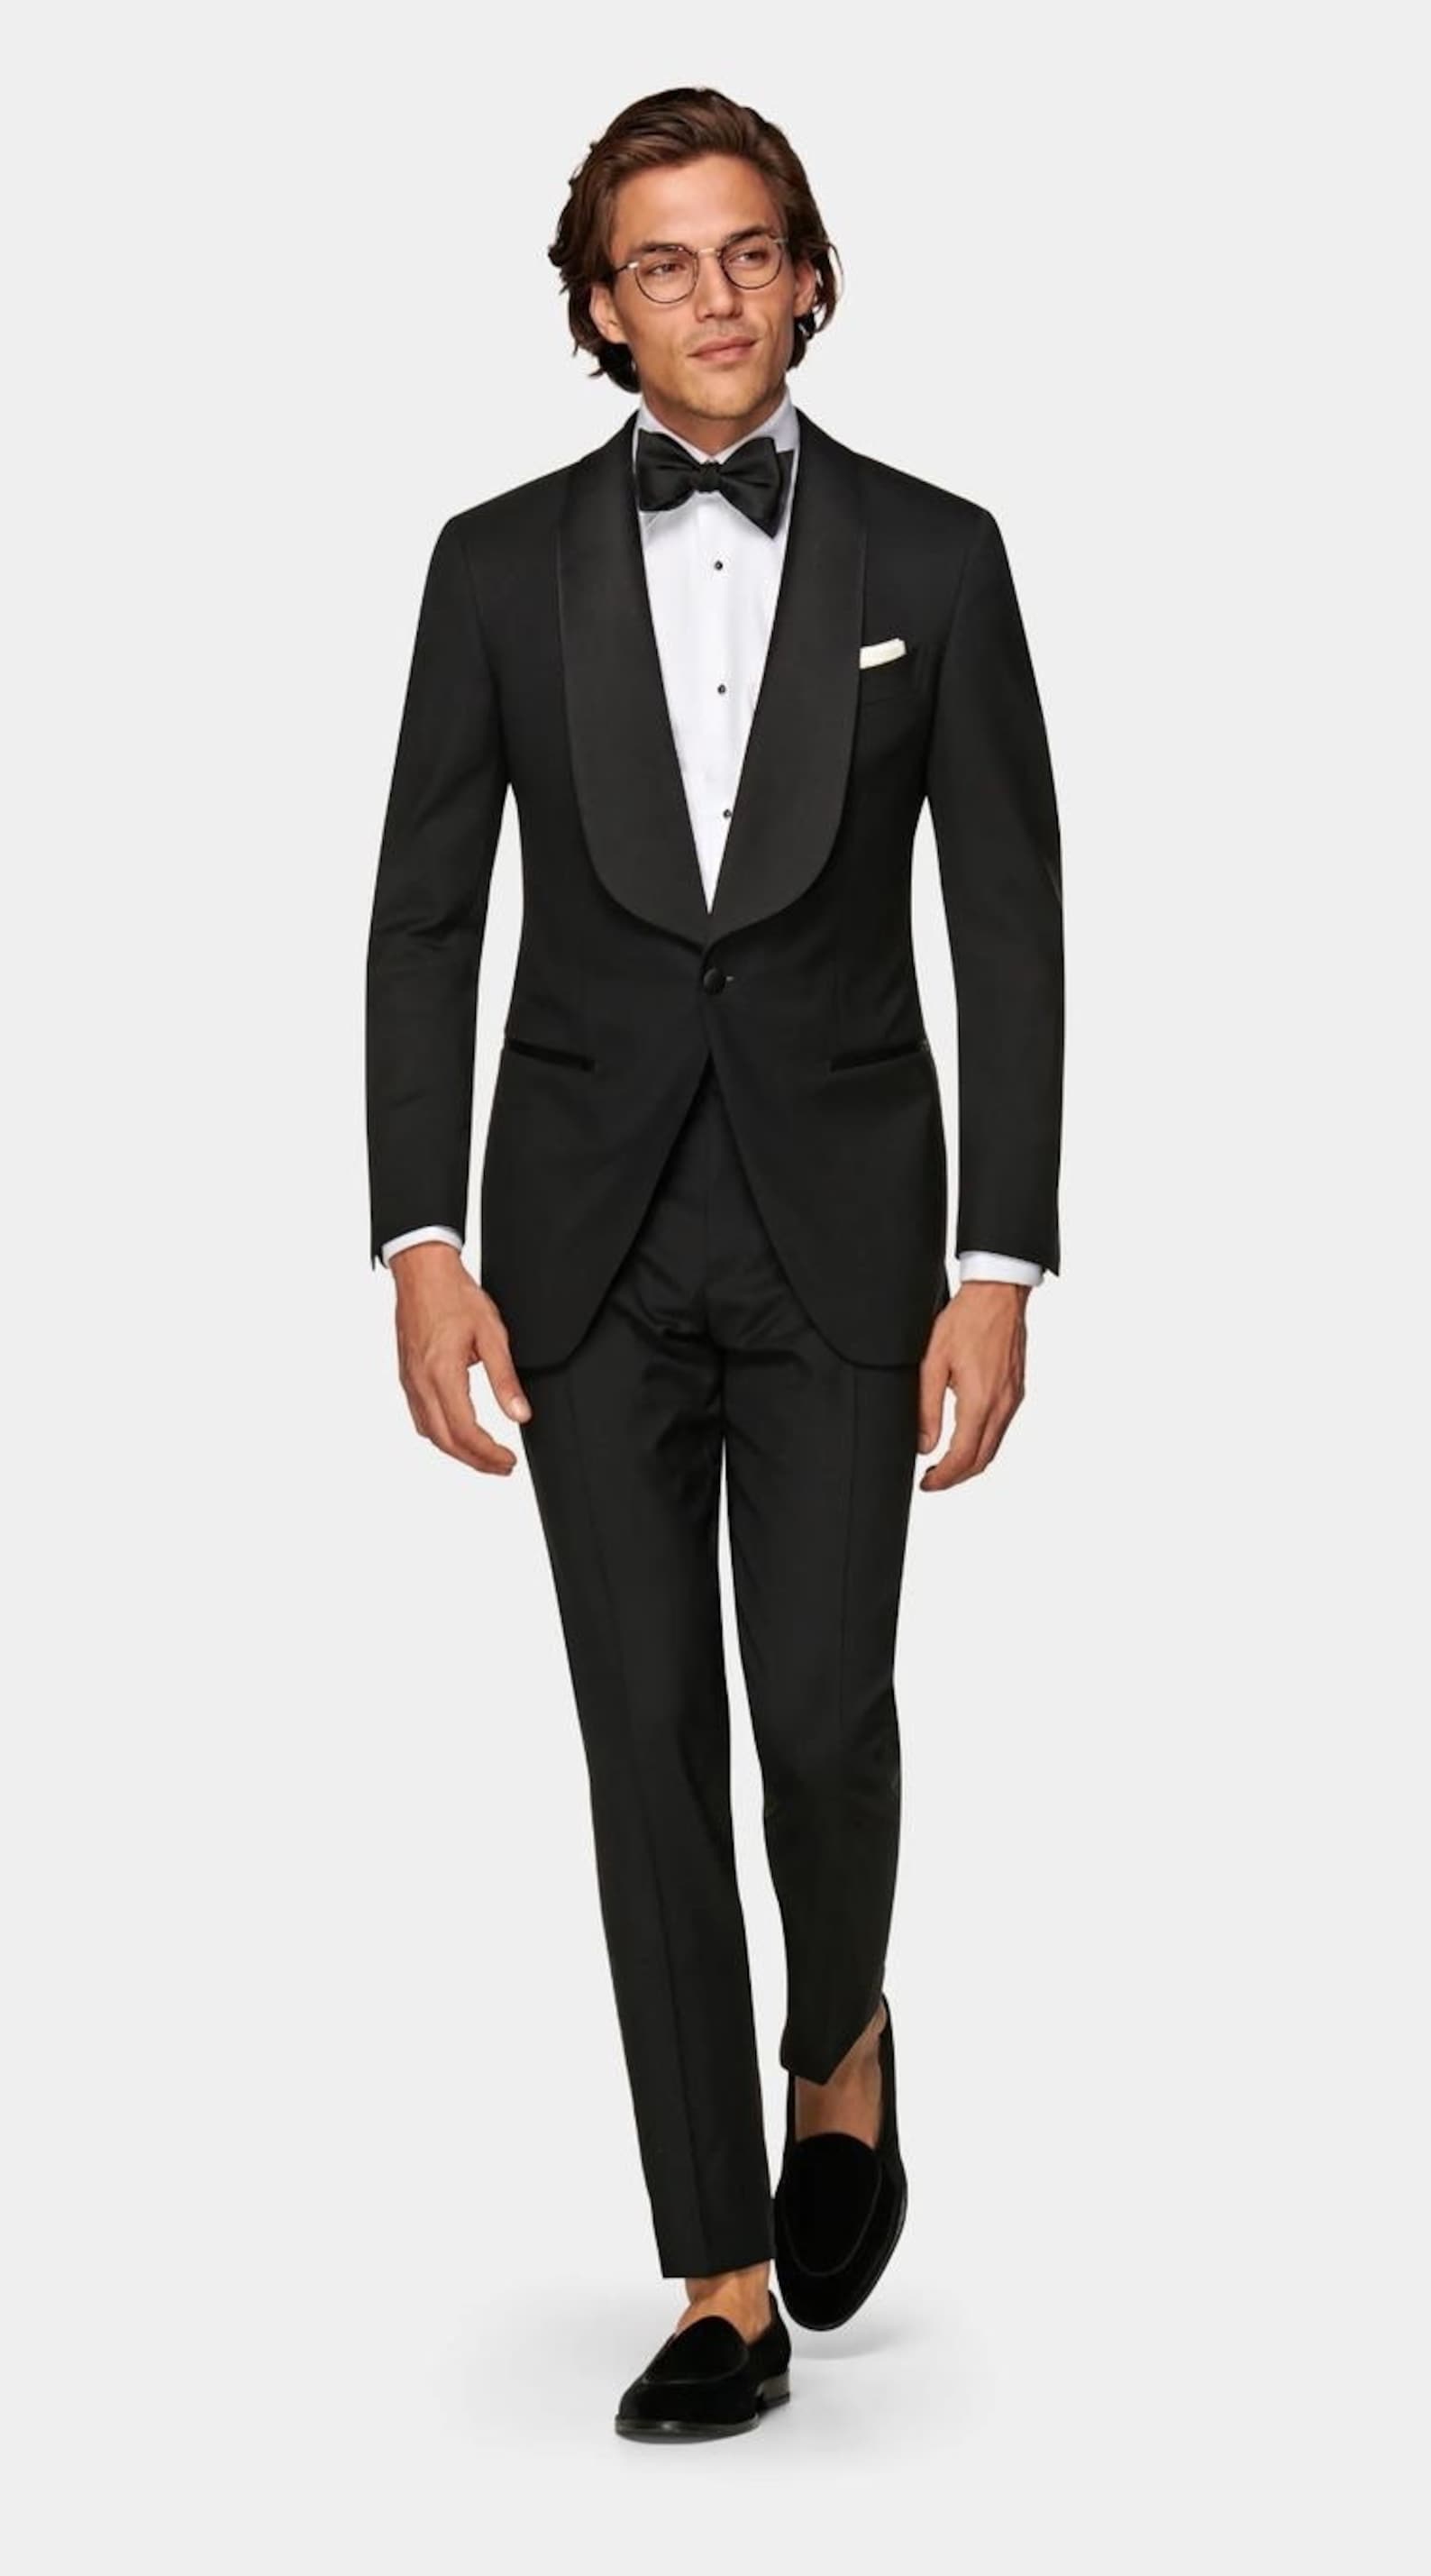 Black Two Pieces Suit Tuxedo for Men Suit for Groom - Etsy